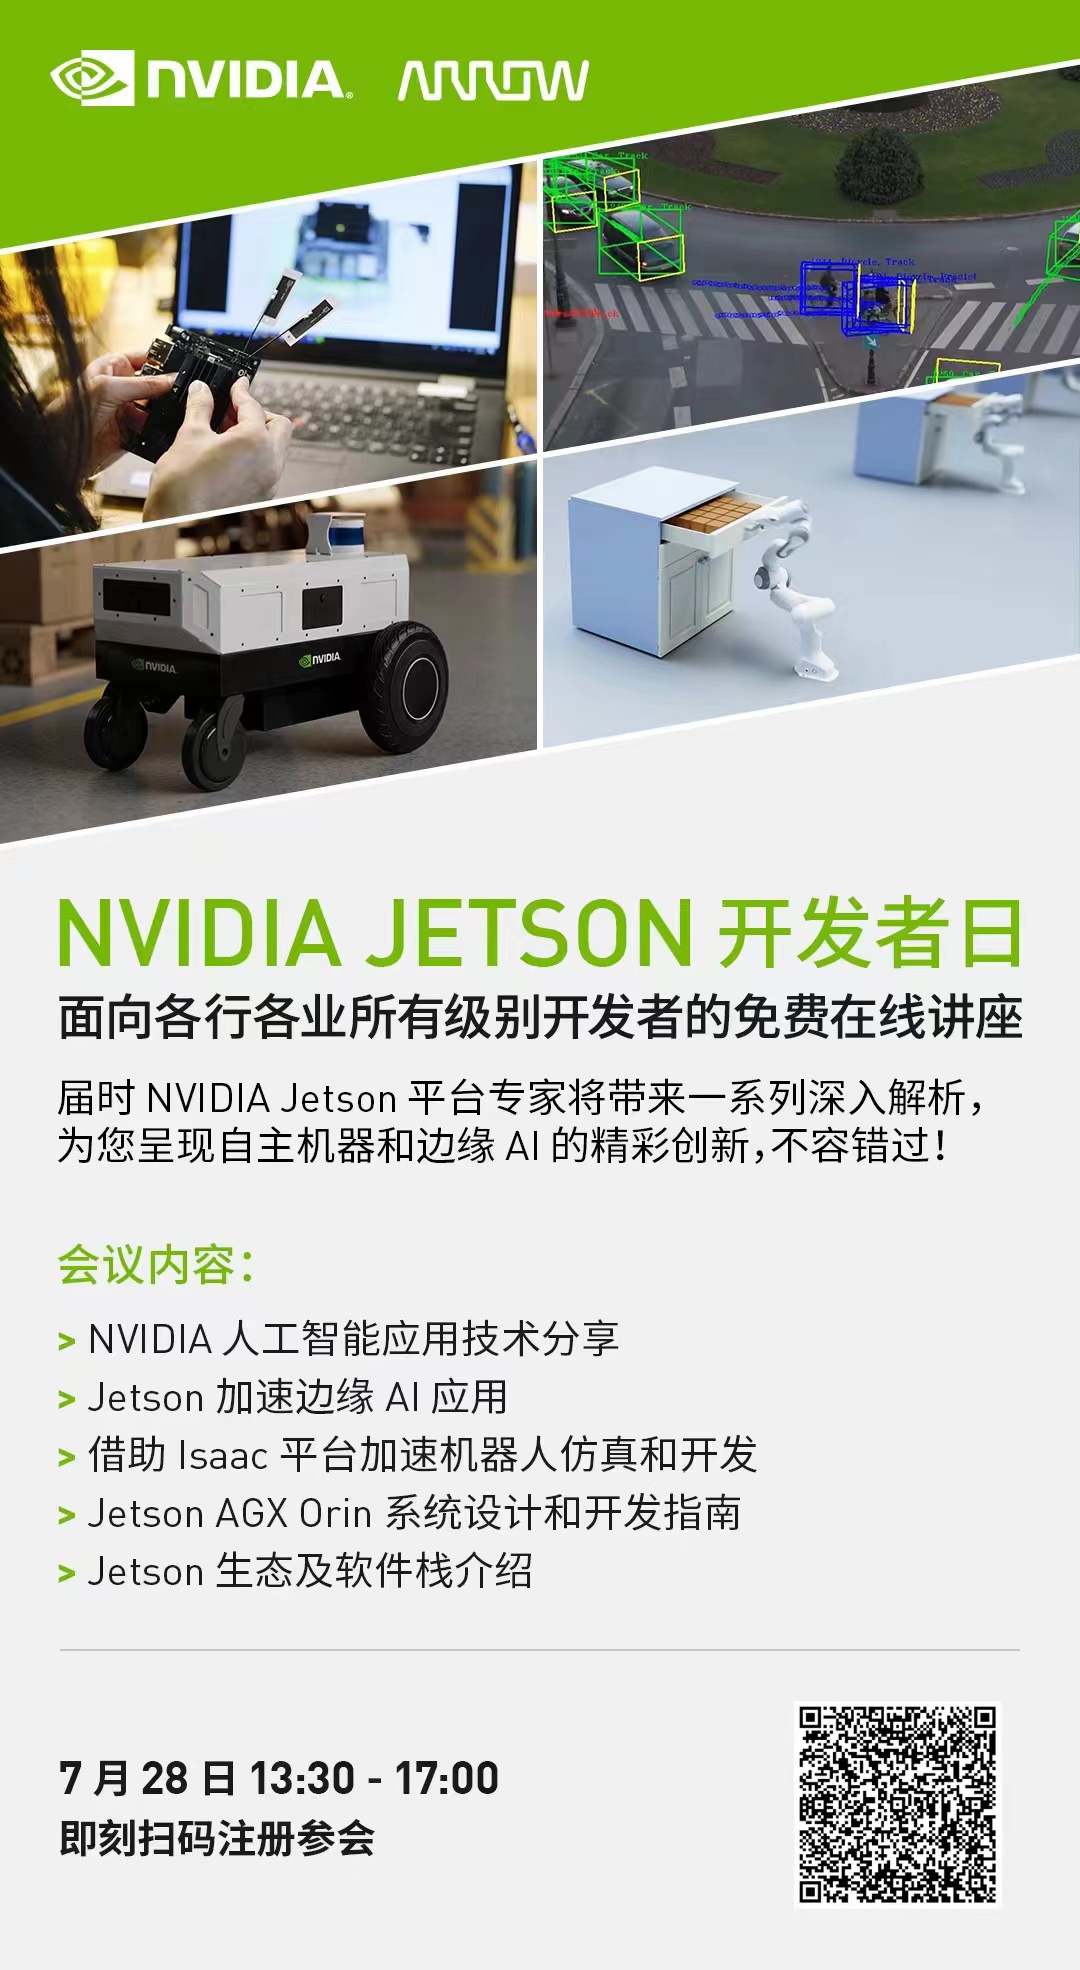 Jetson Developer Day promotion poster.jpg